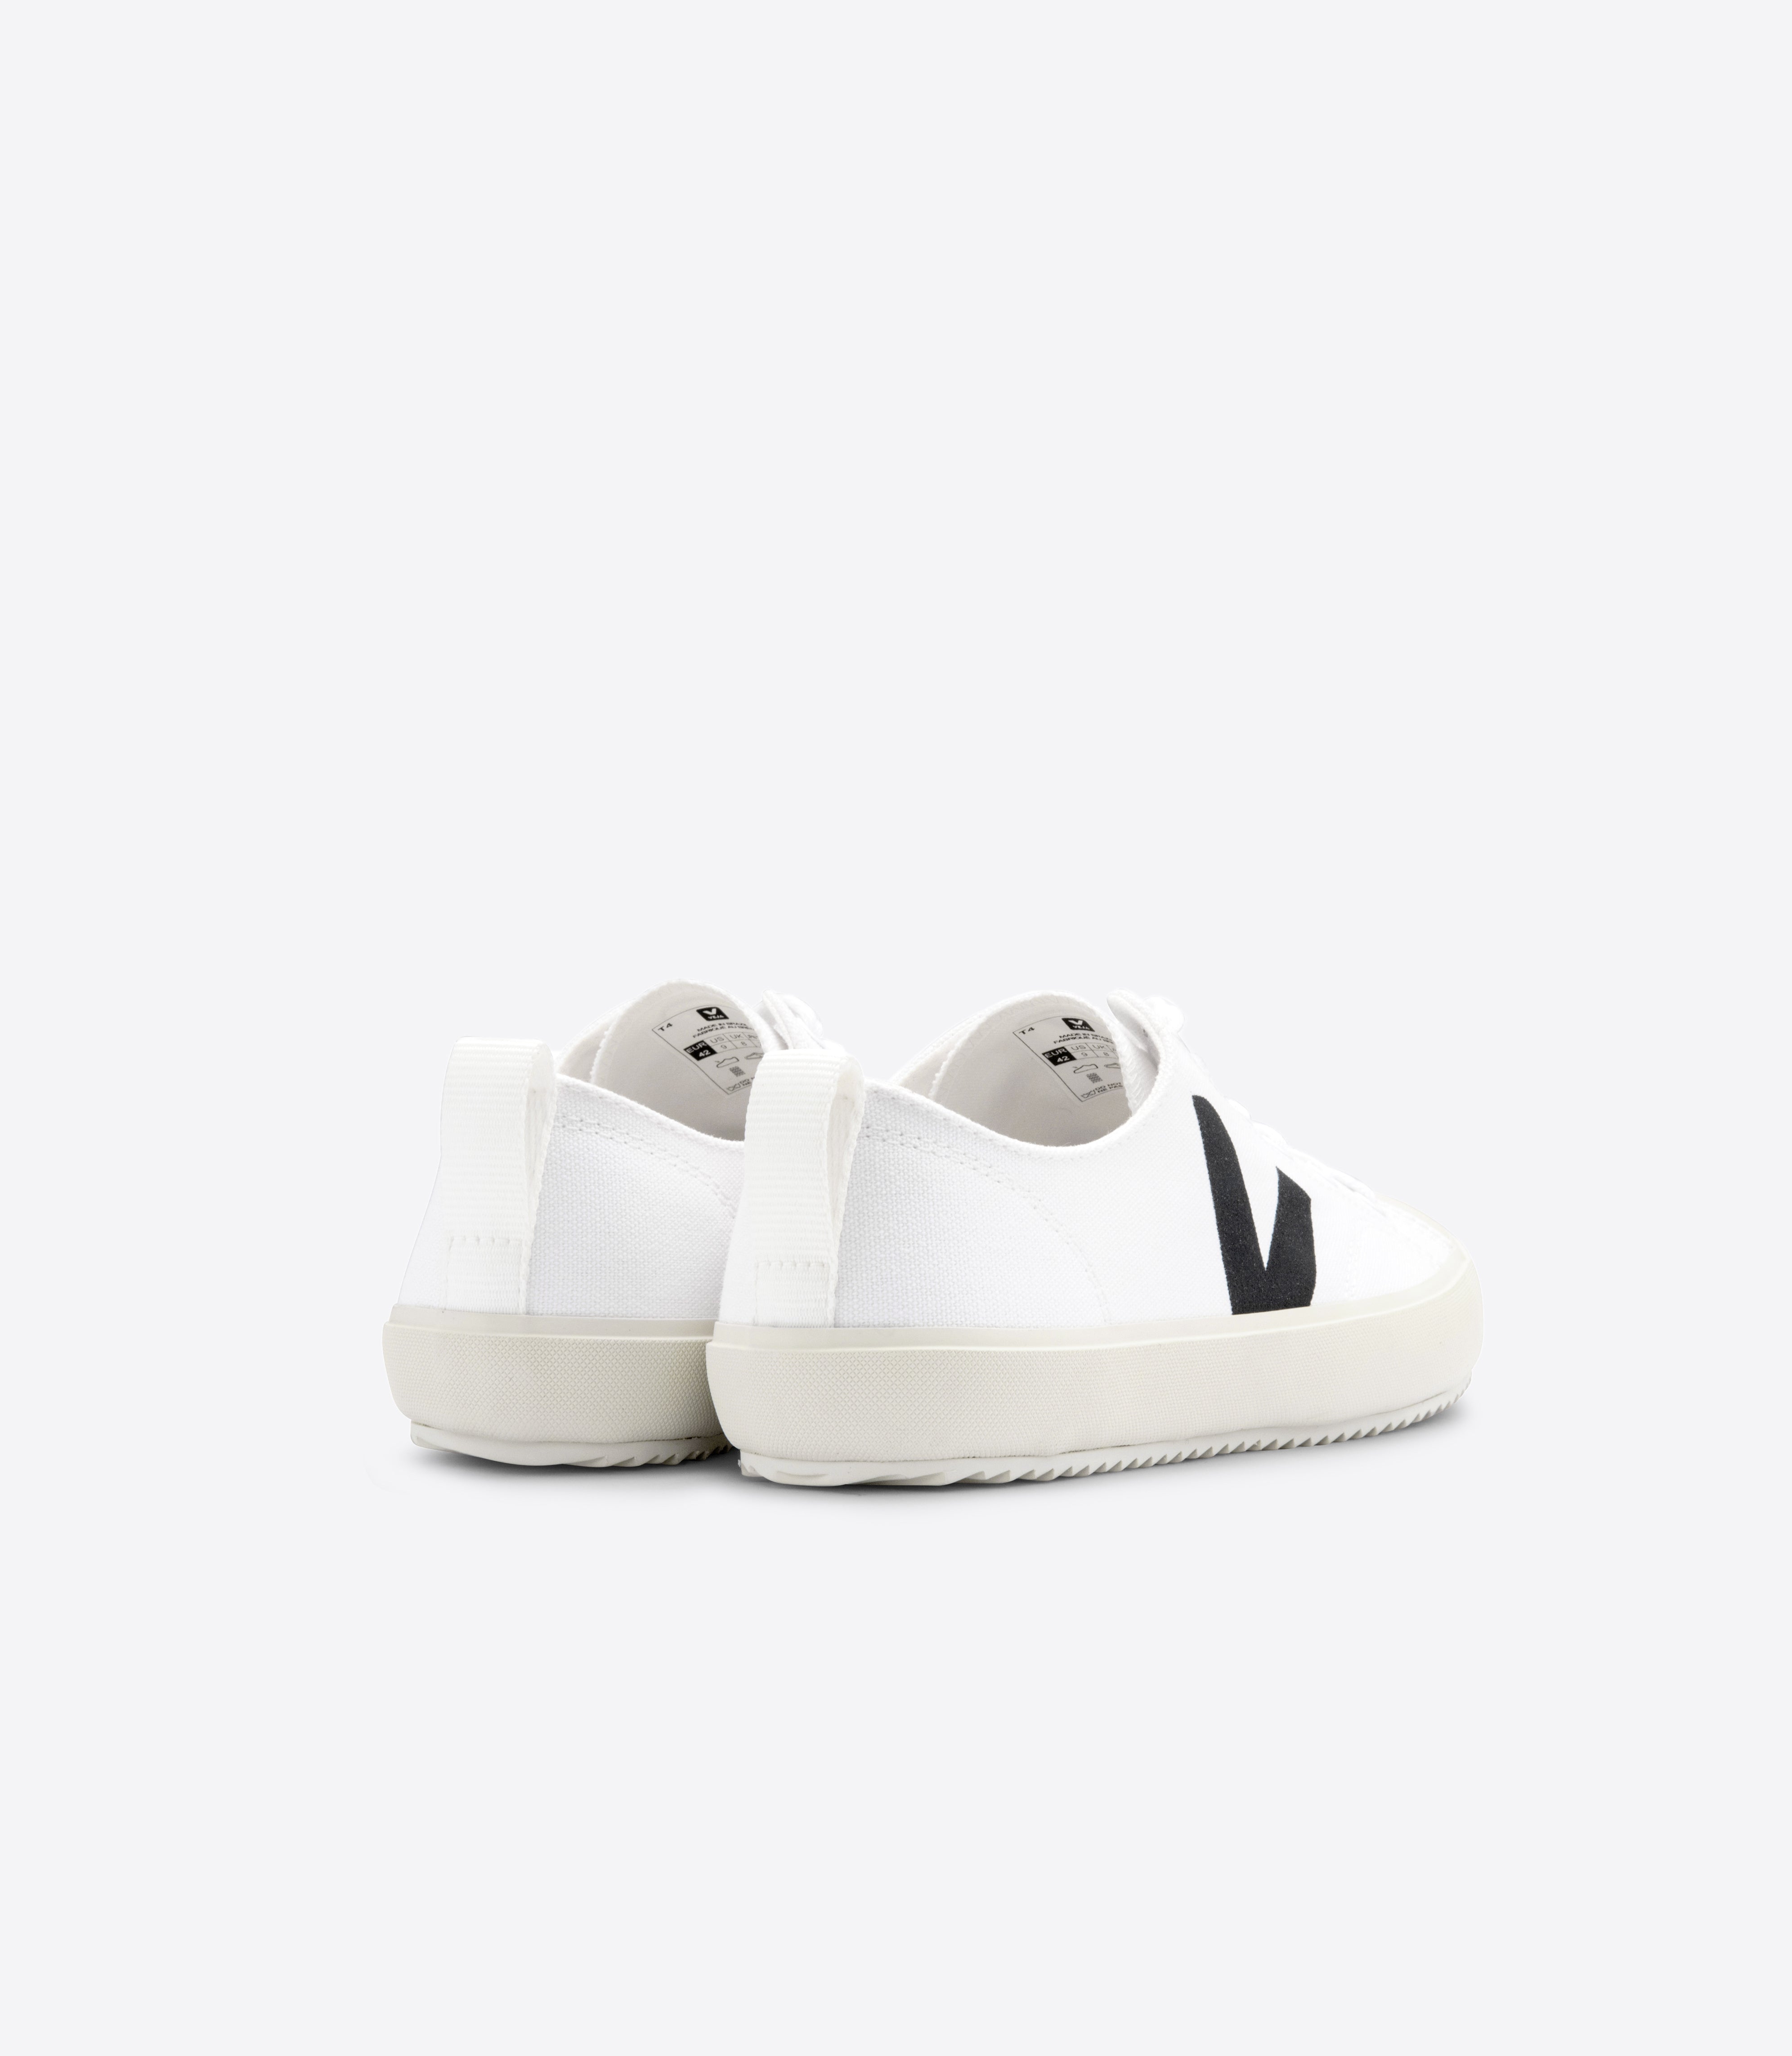 Organic Cotton Sneakers for Men - White Black